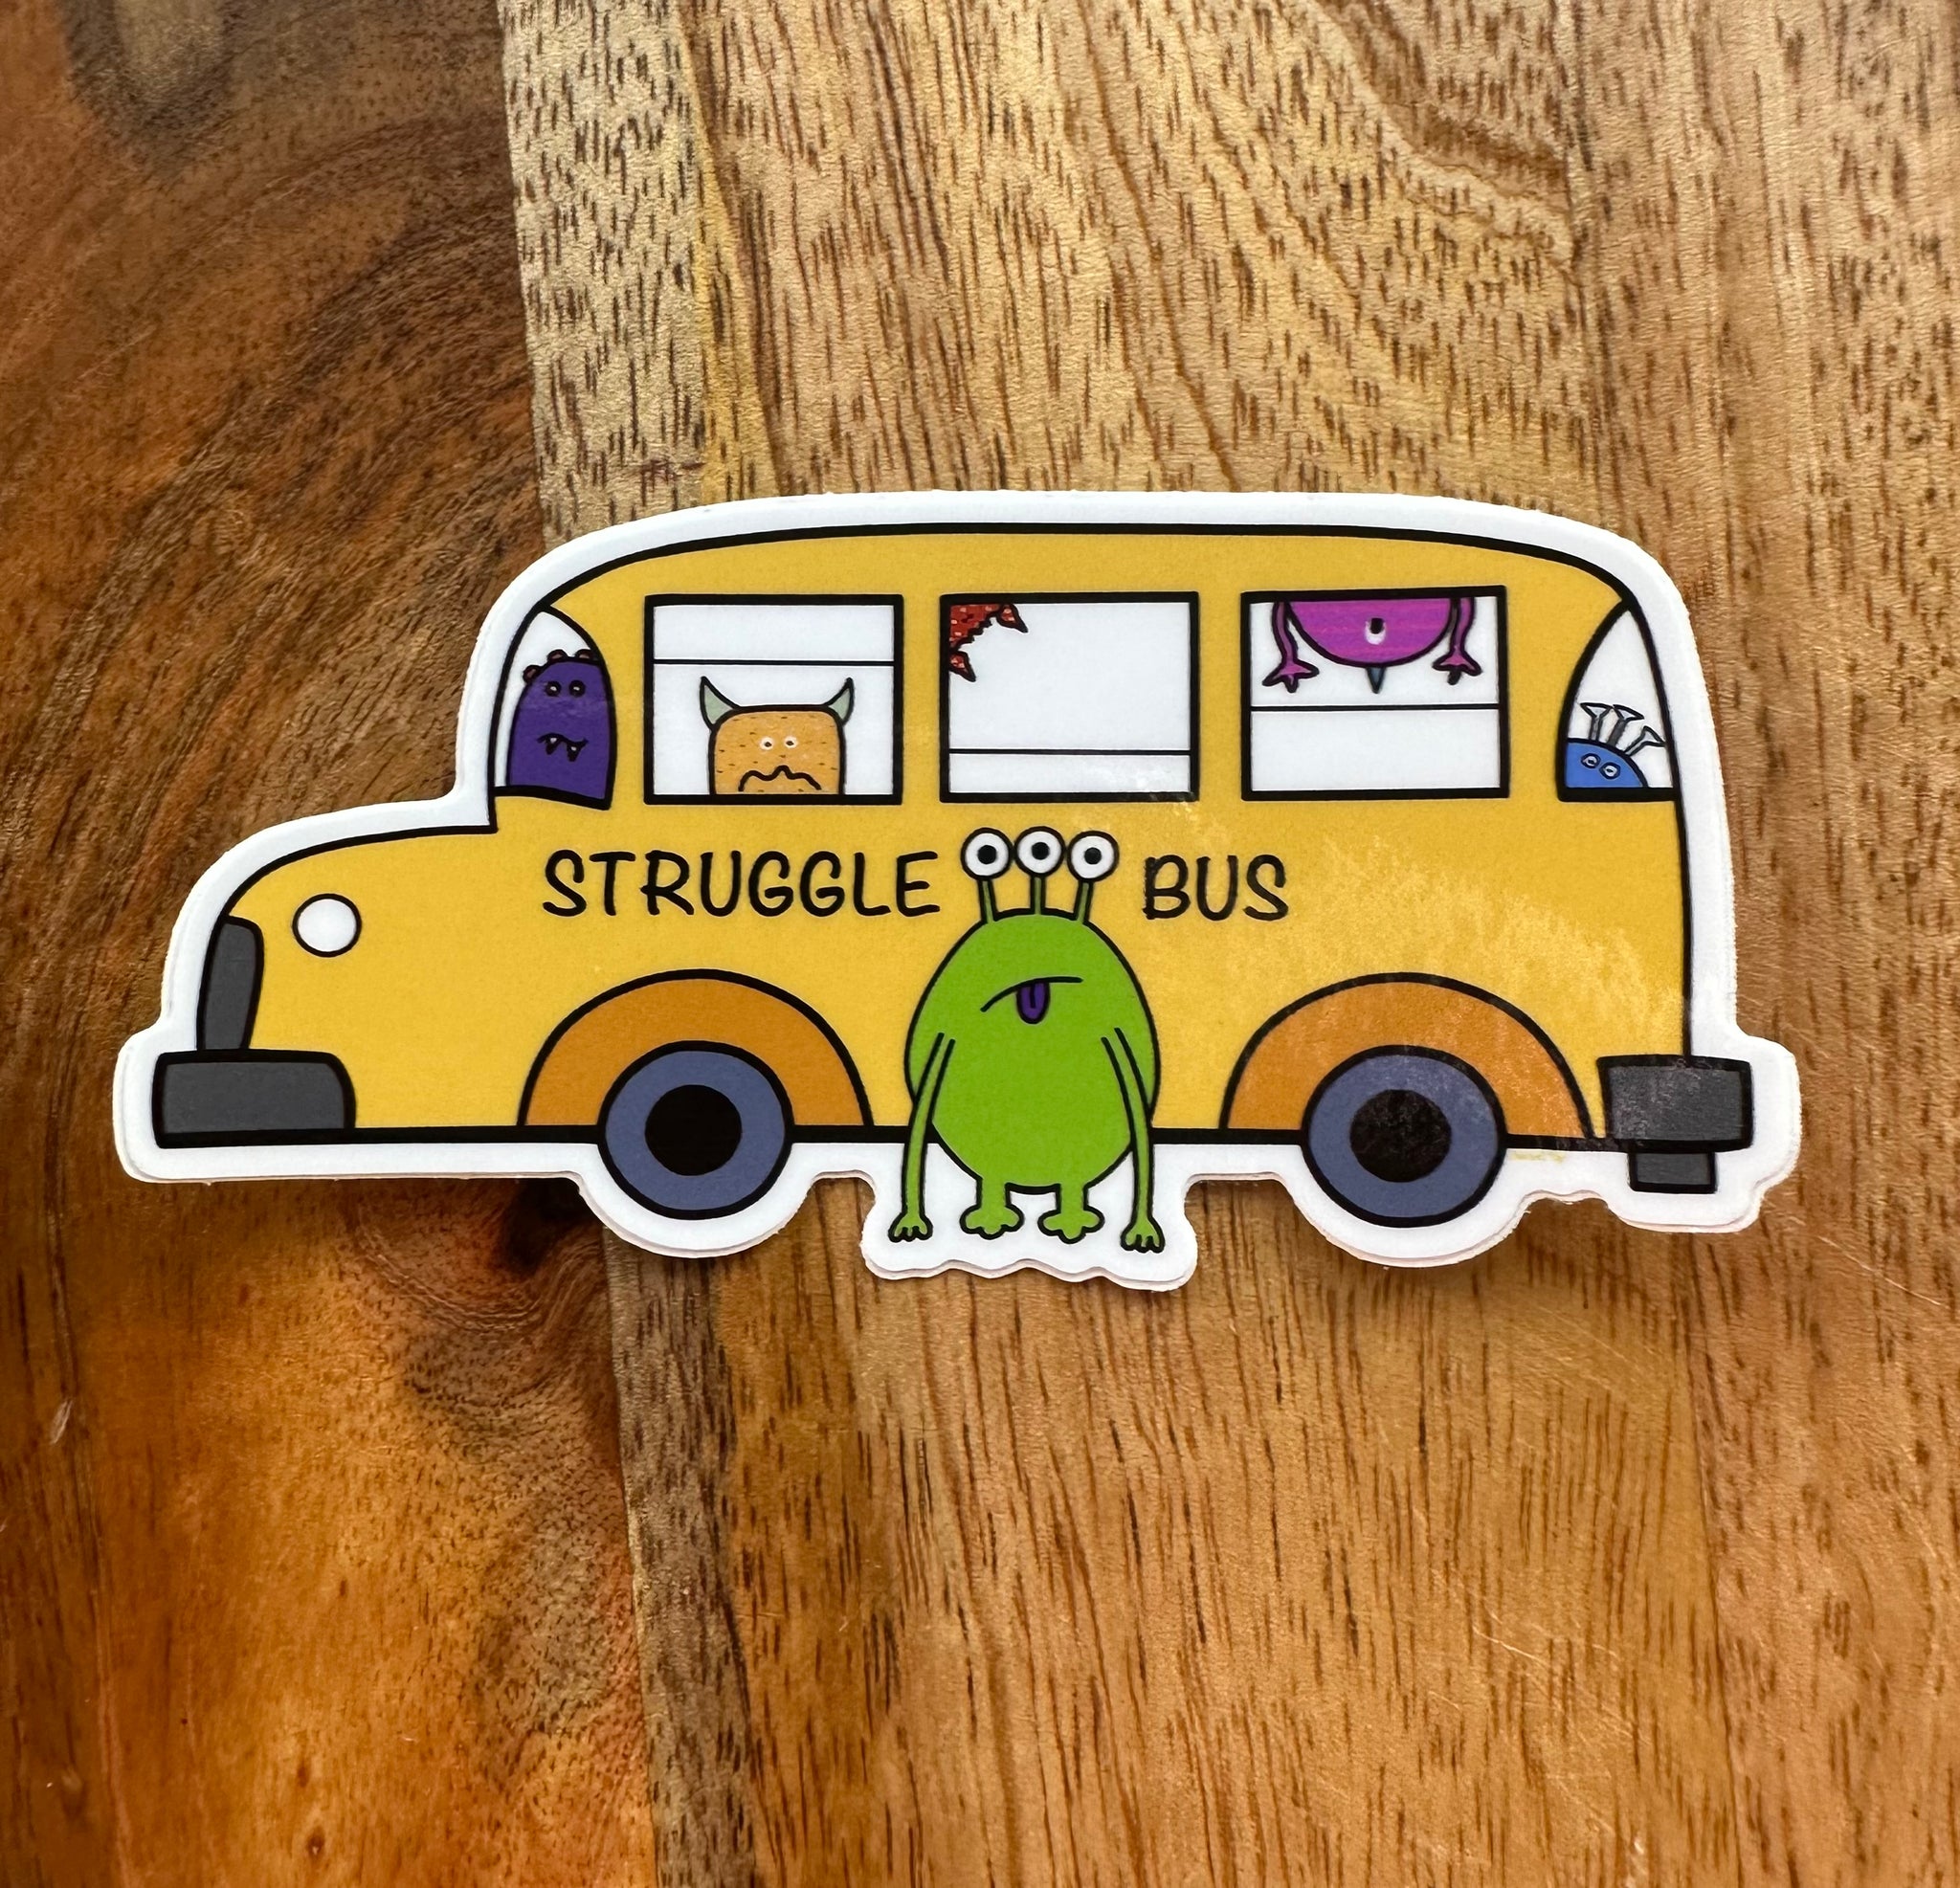 Struggle bus sticker